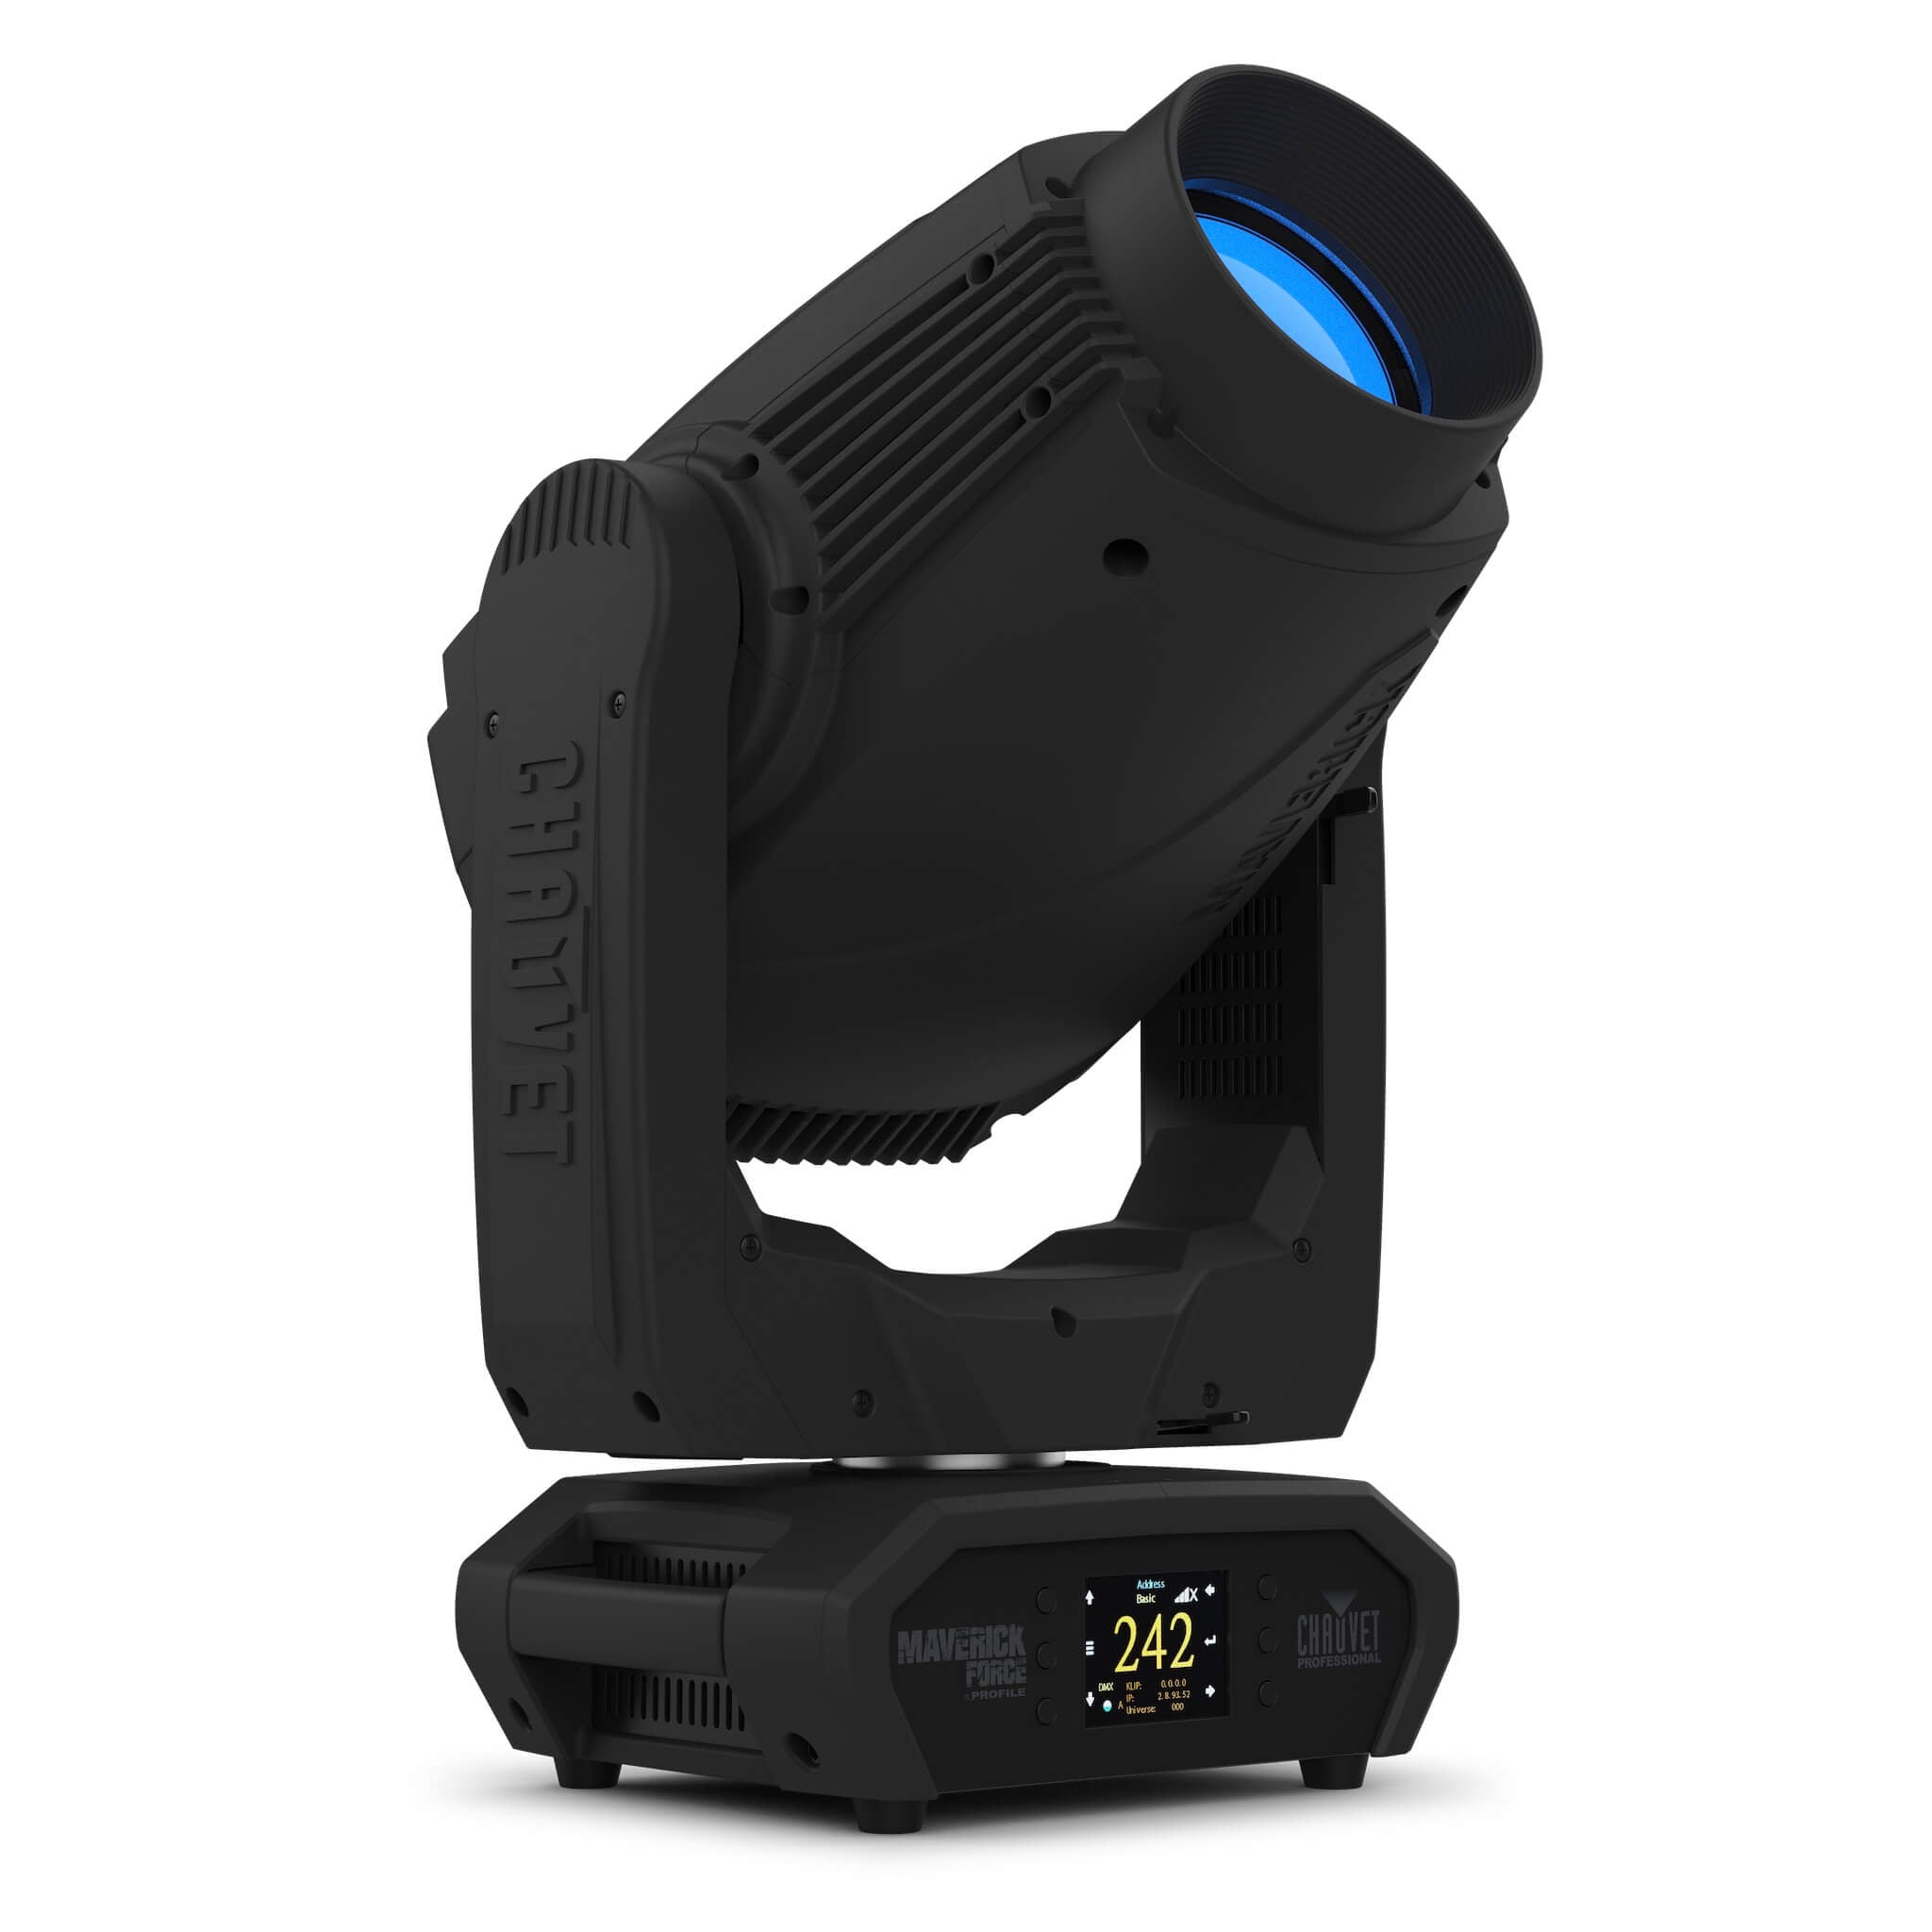 Chauvet Professional Maverick Force S Profile - LED Moving Head Light, right